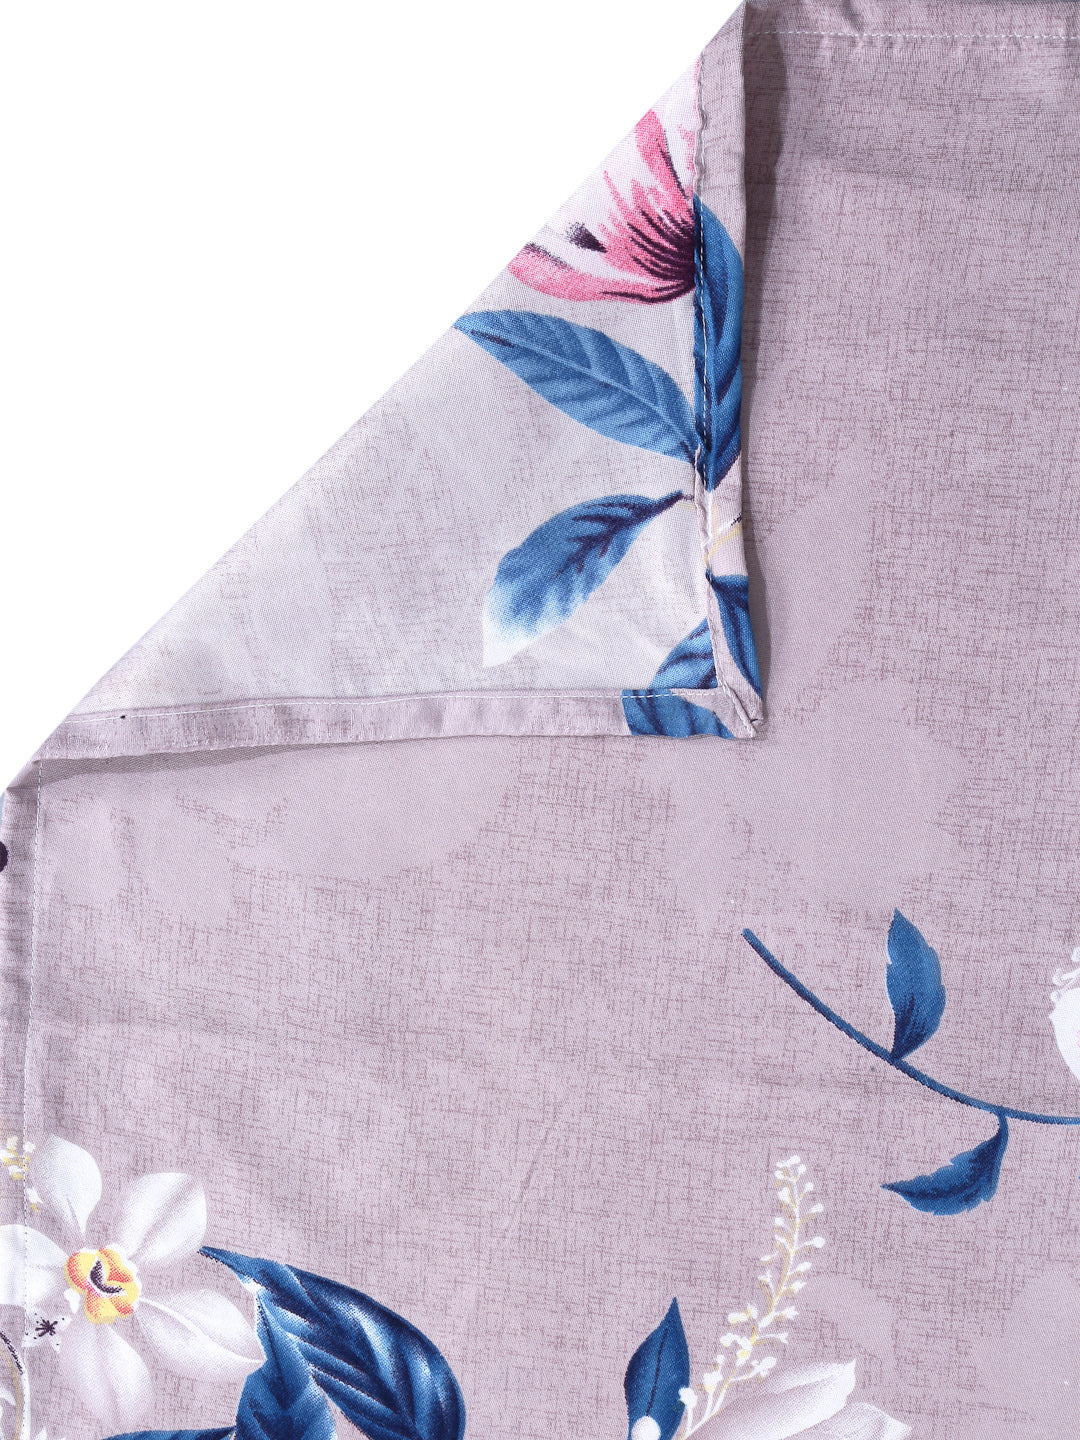 Arrabi Grey Floral TC Cotton Blend Double King Size Bedsheet with 2 Pillow Covers (270 x 260 cm)